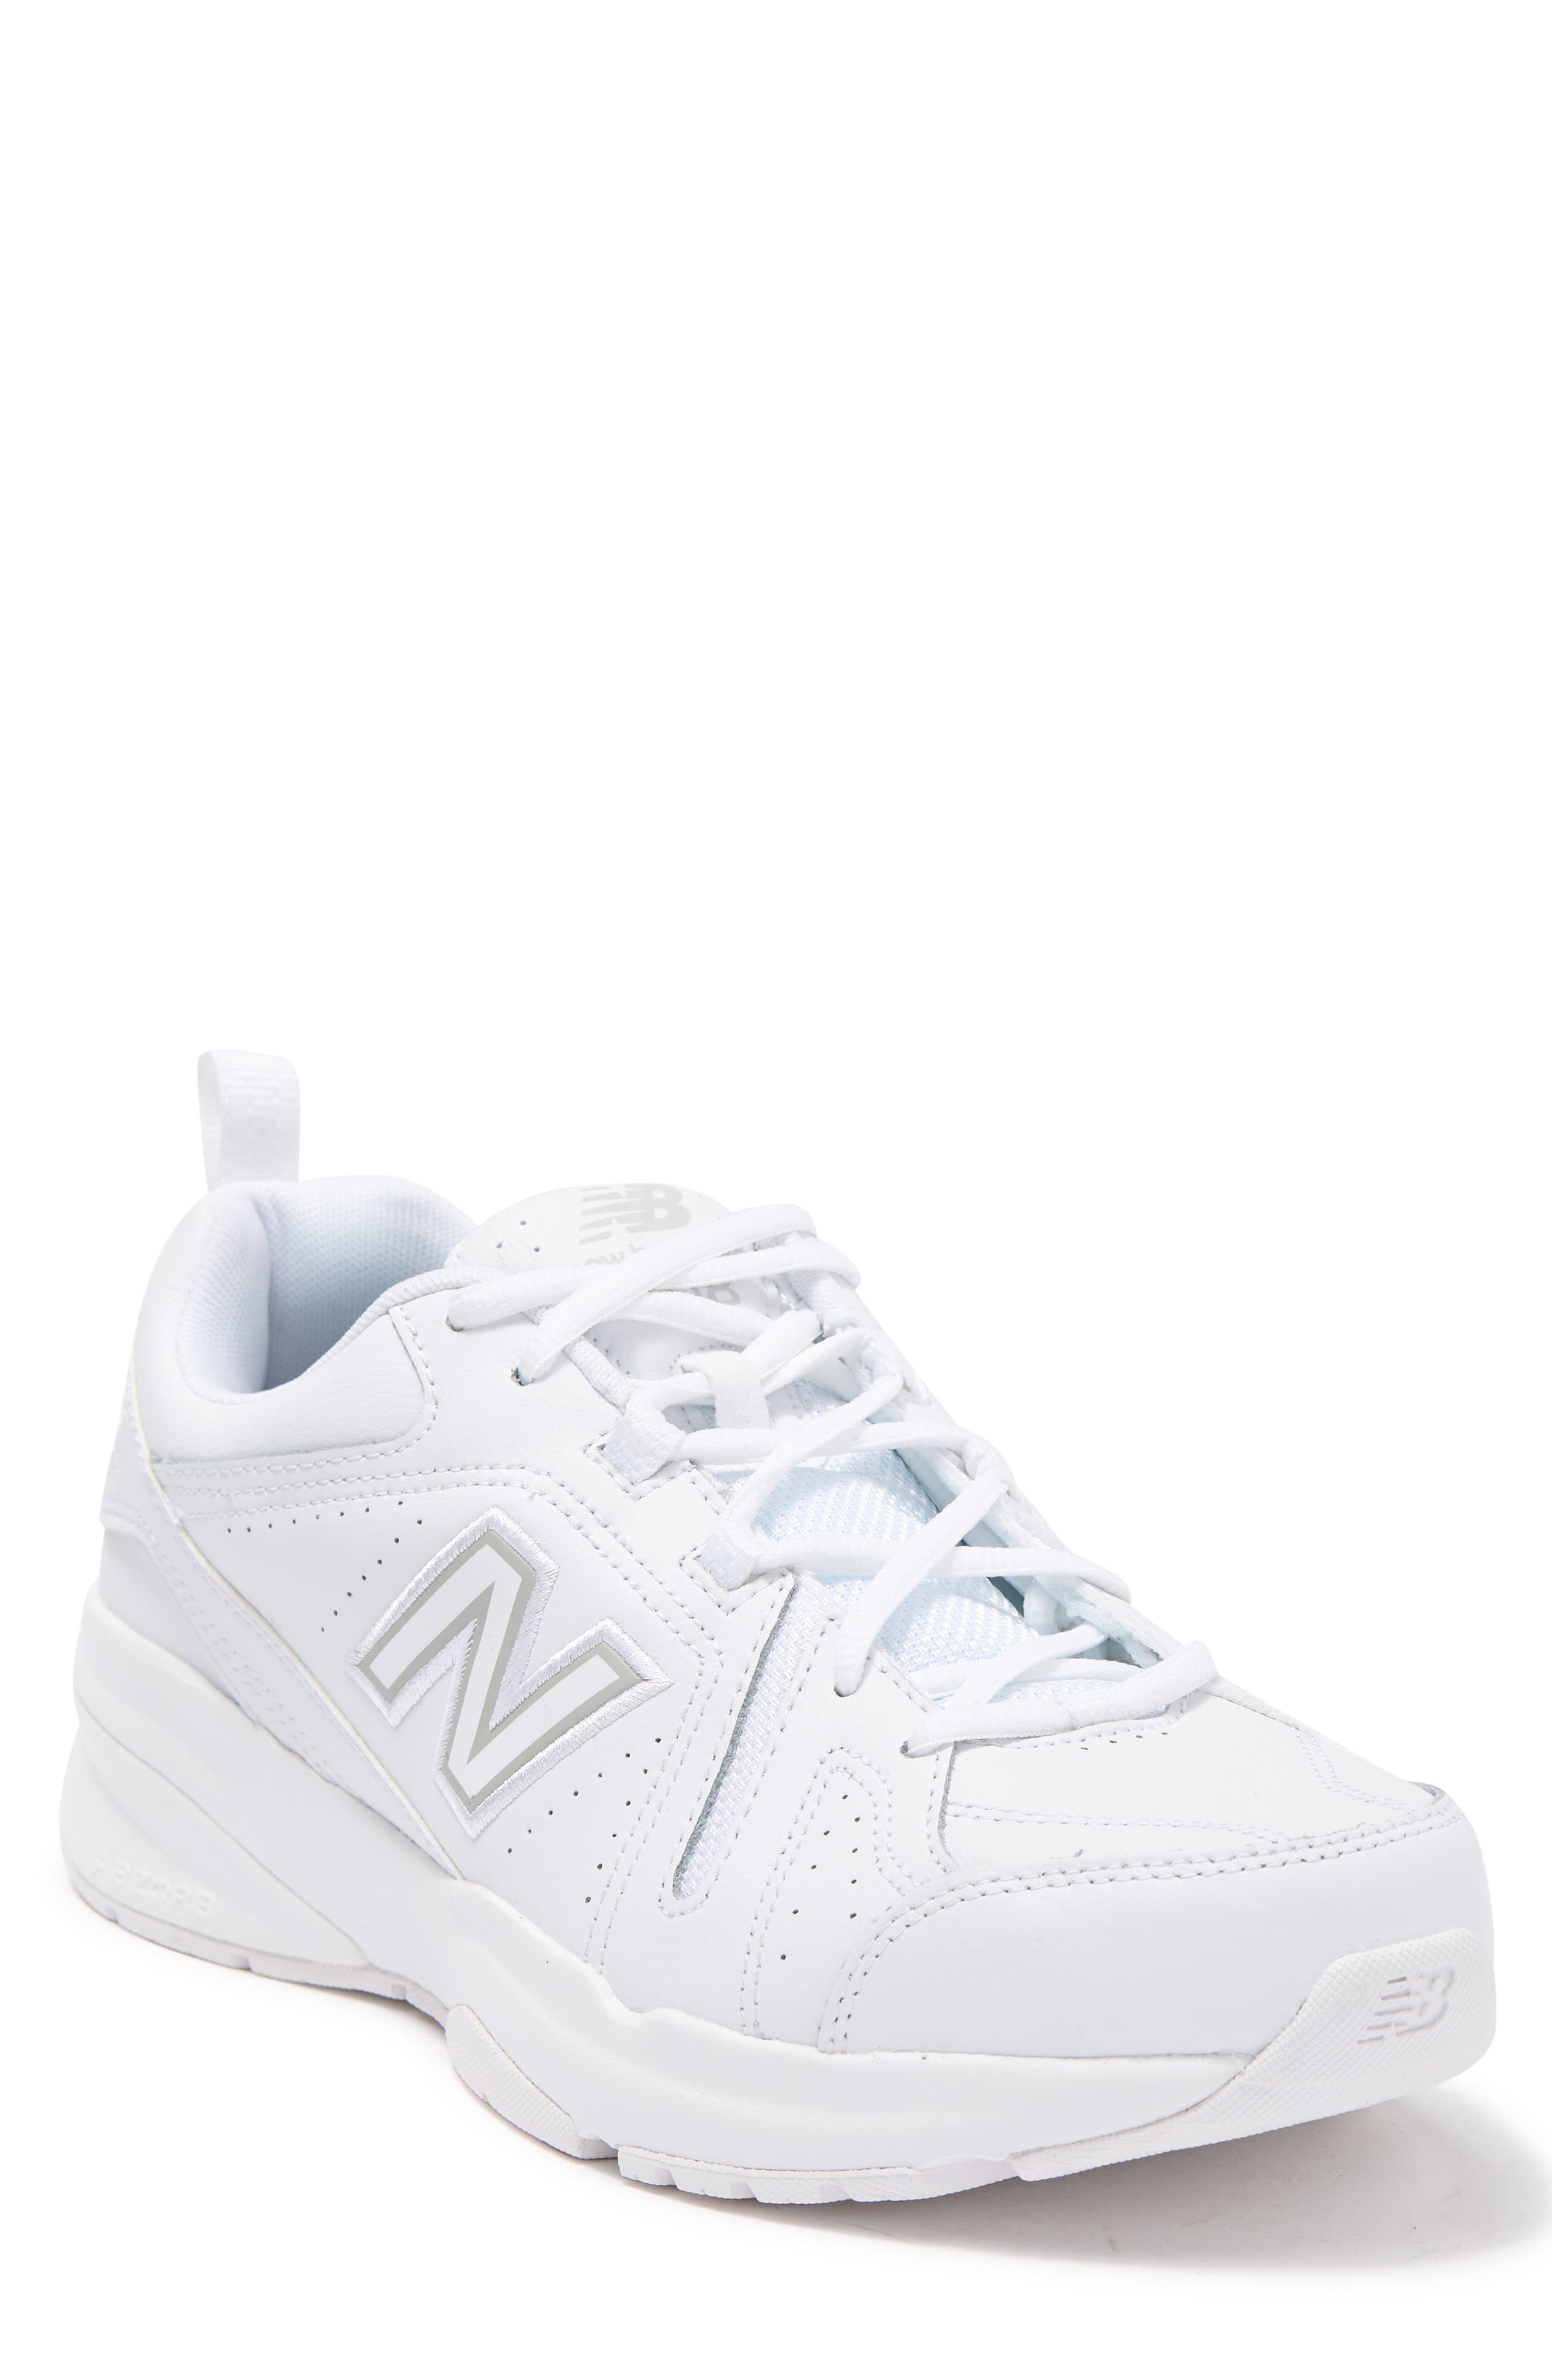 New Balance 608 V5 Training Shoe In White/white | ModeSens